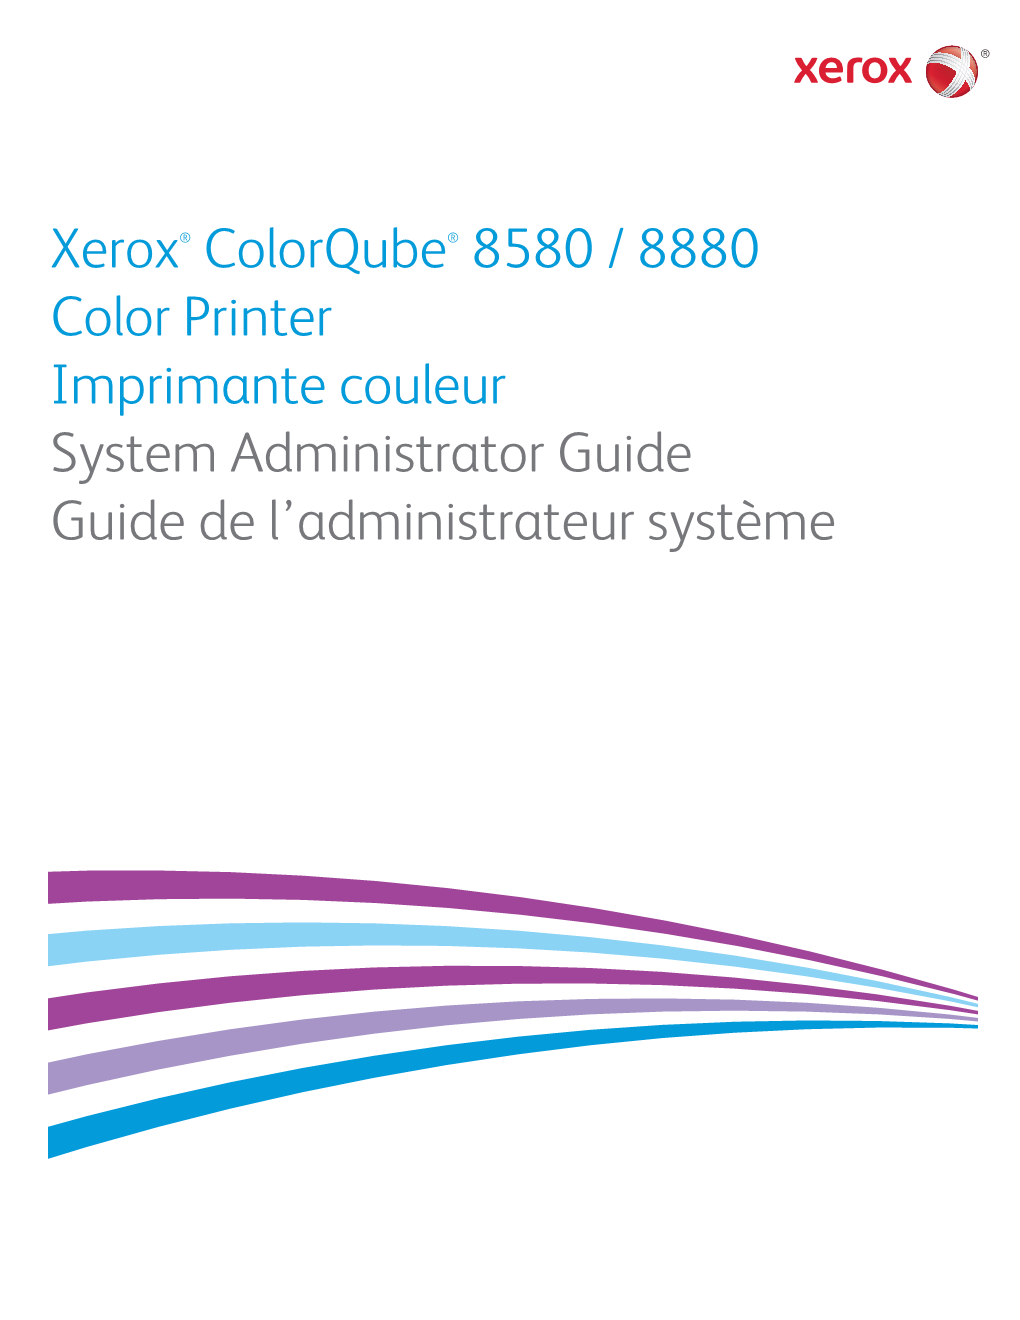 Xerox® Colorqube 8580/8880 Color Printer 3 System Administrator Guide